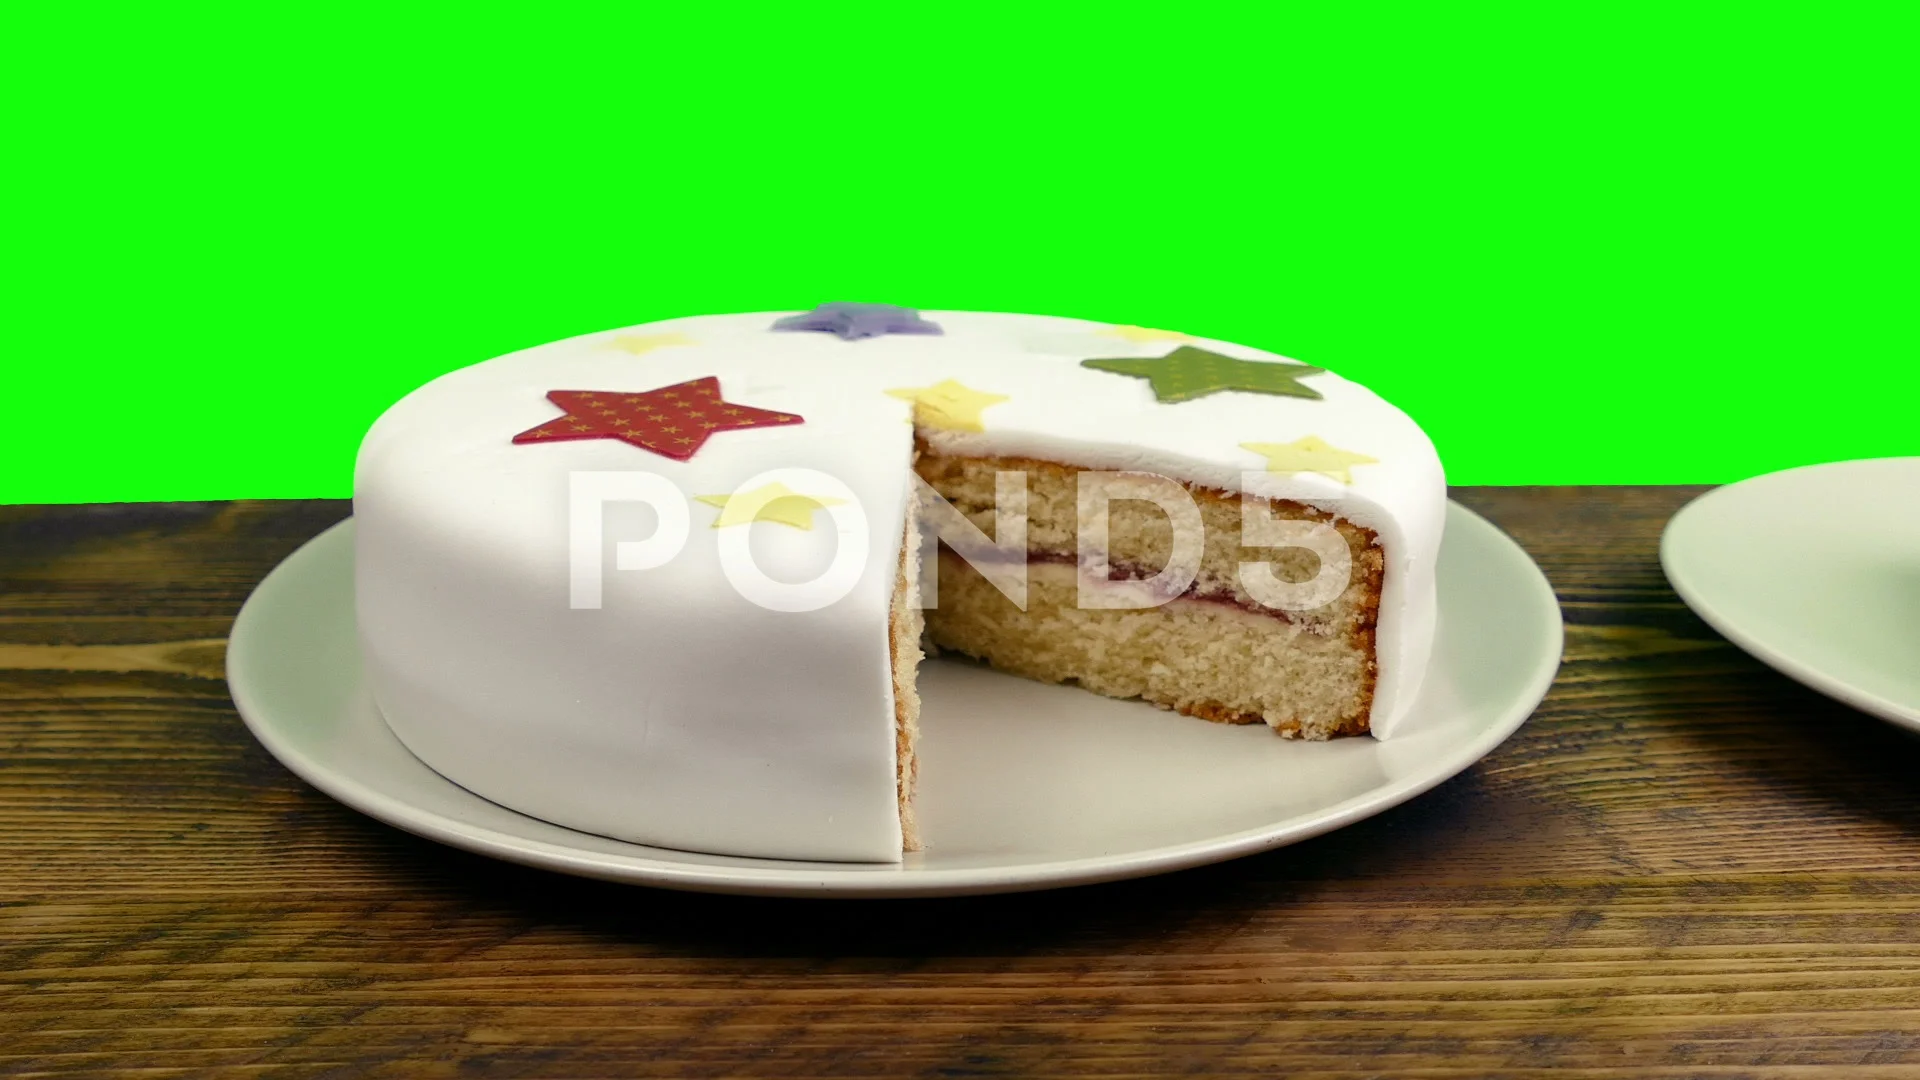 Cutting Cake - Green Screen [FREE USE] - YouTube